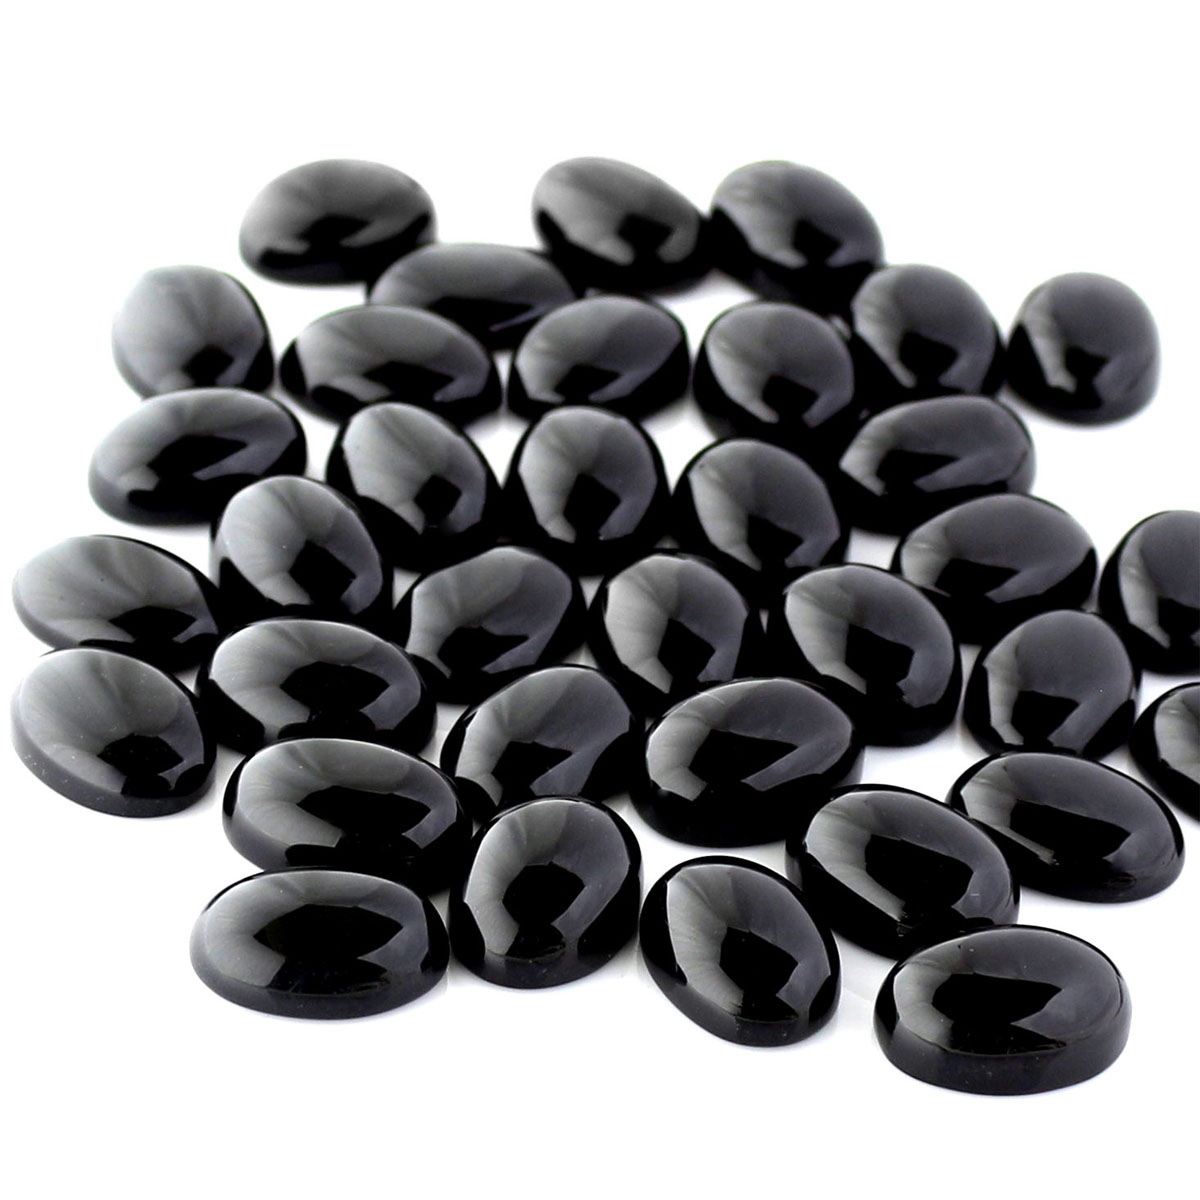 Calibrated black onyx cabochons